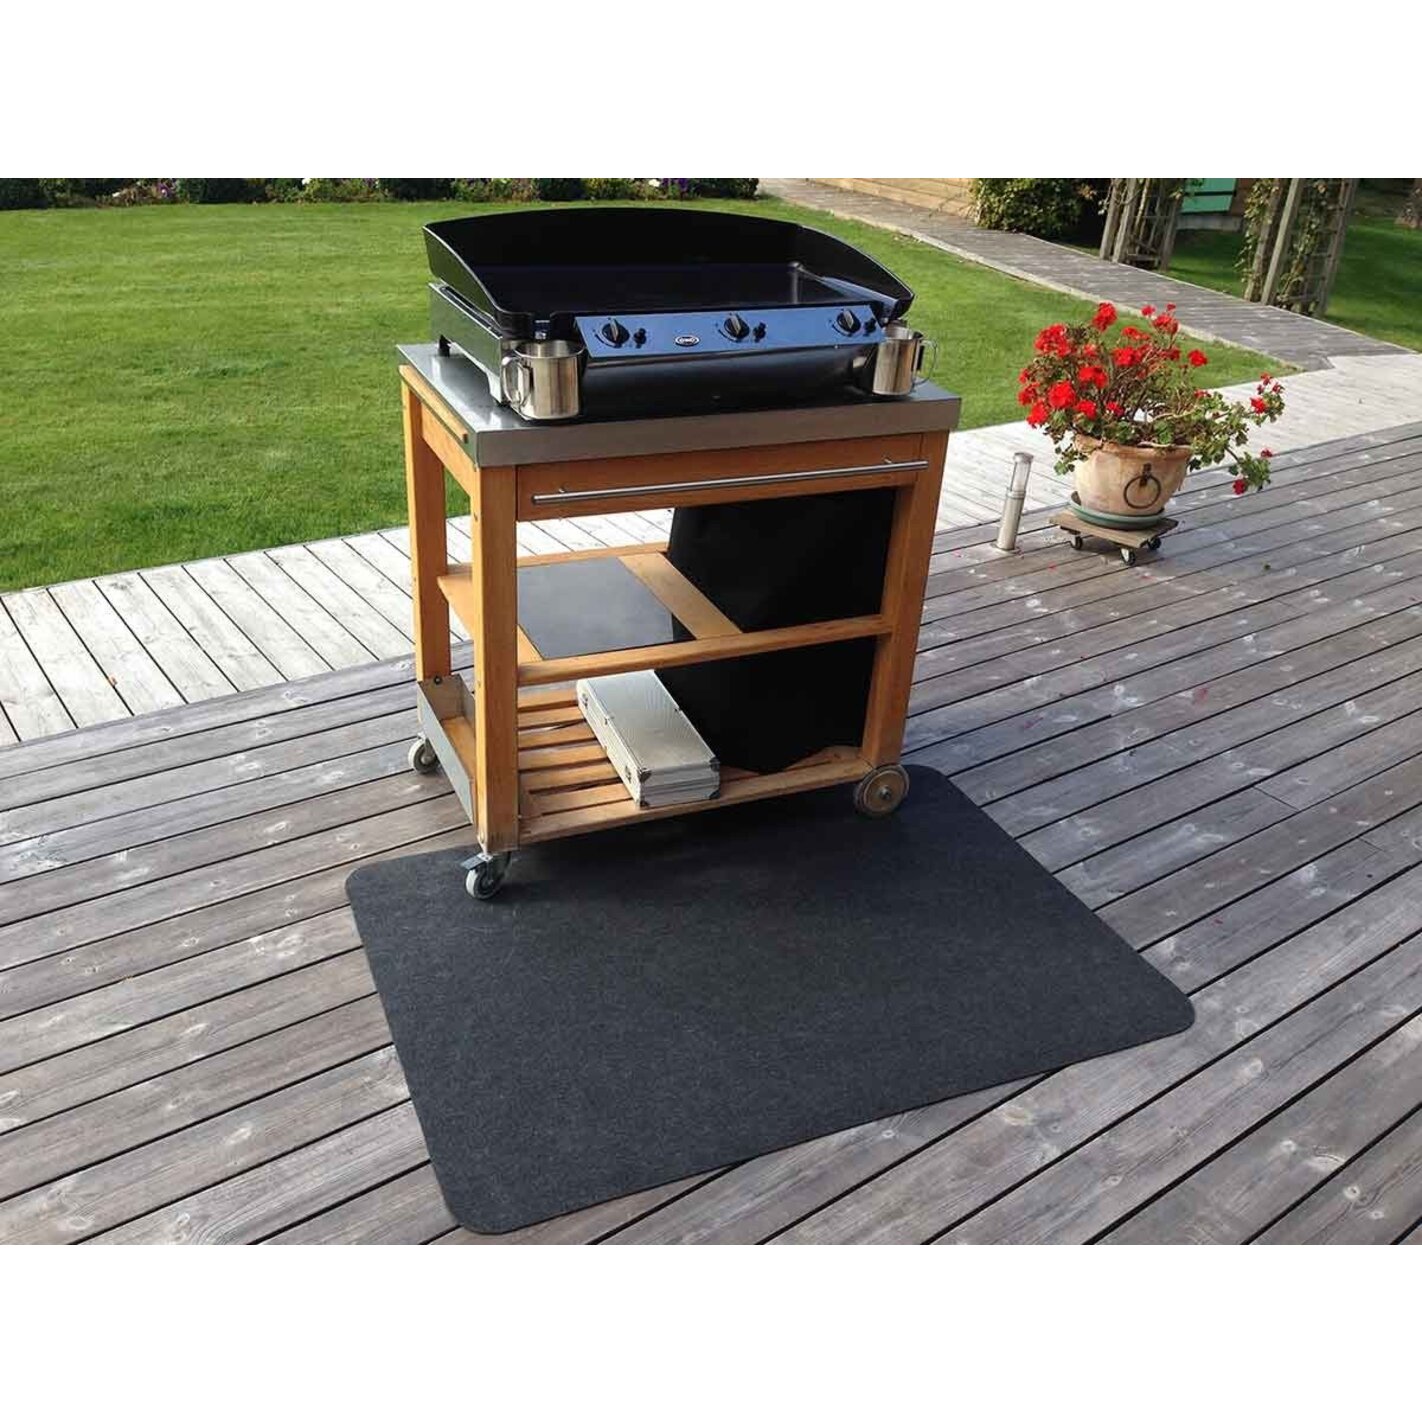 Tapis de sol pour barbecue